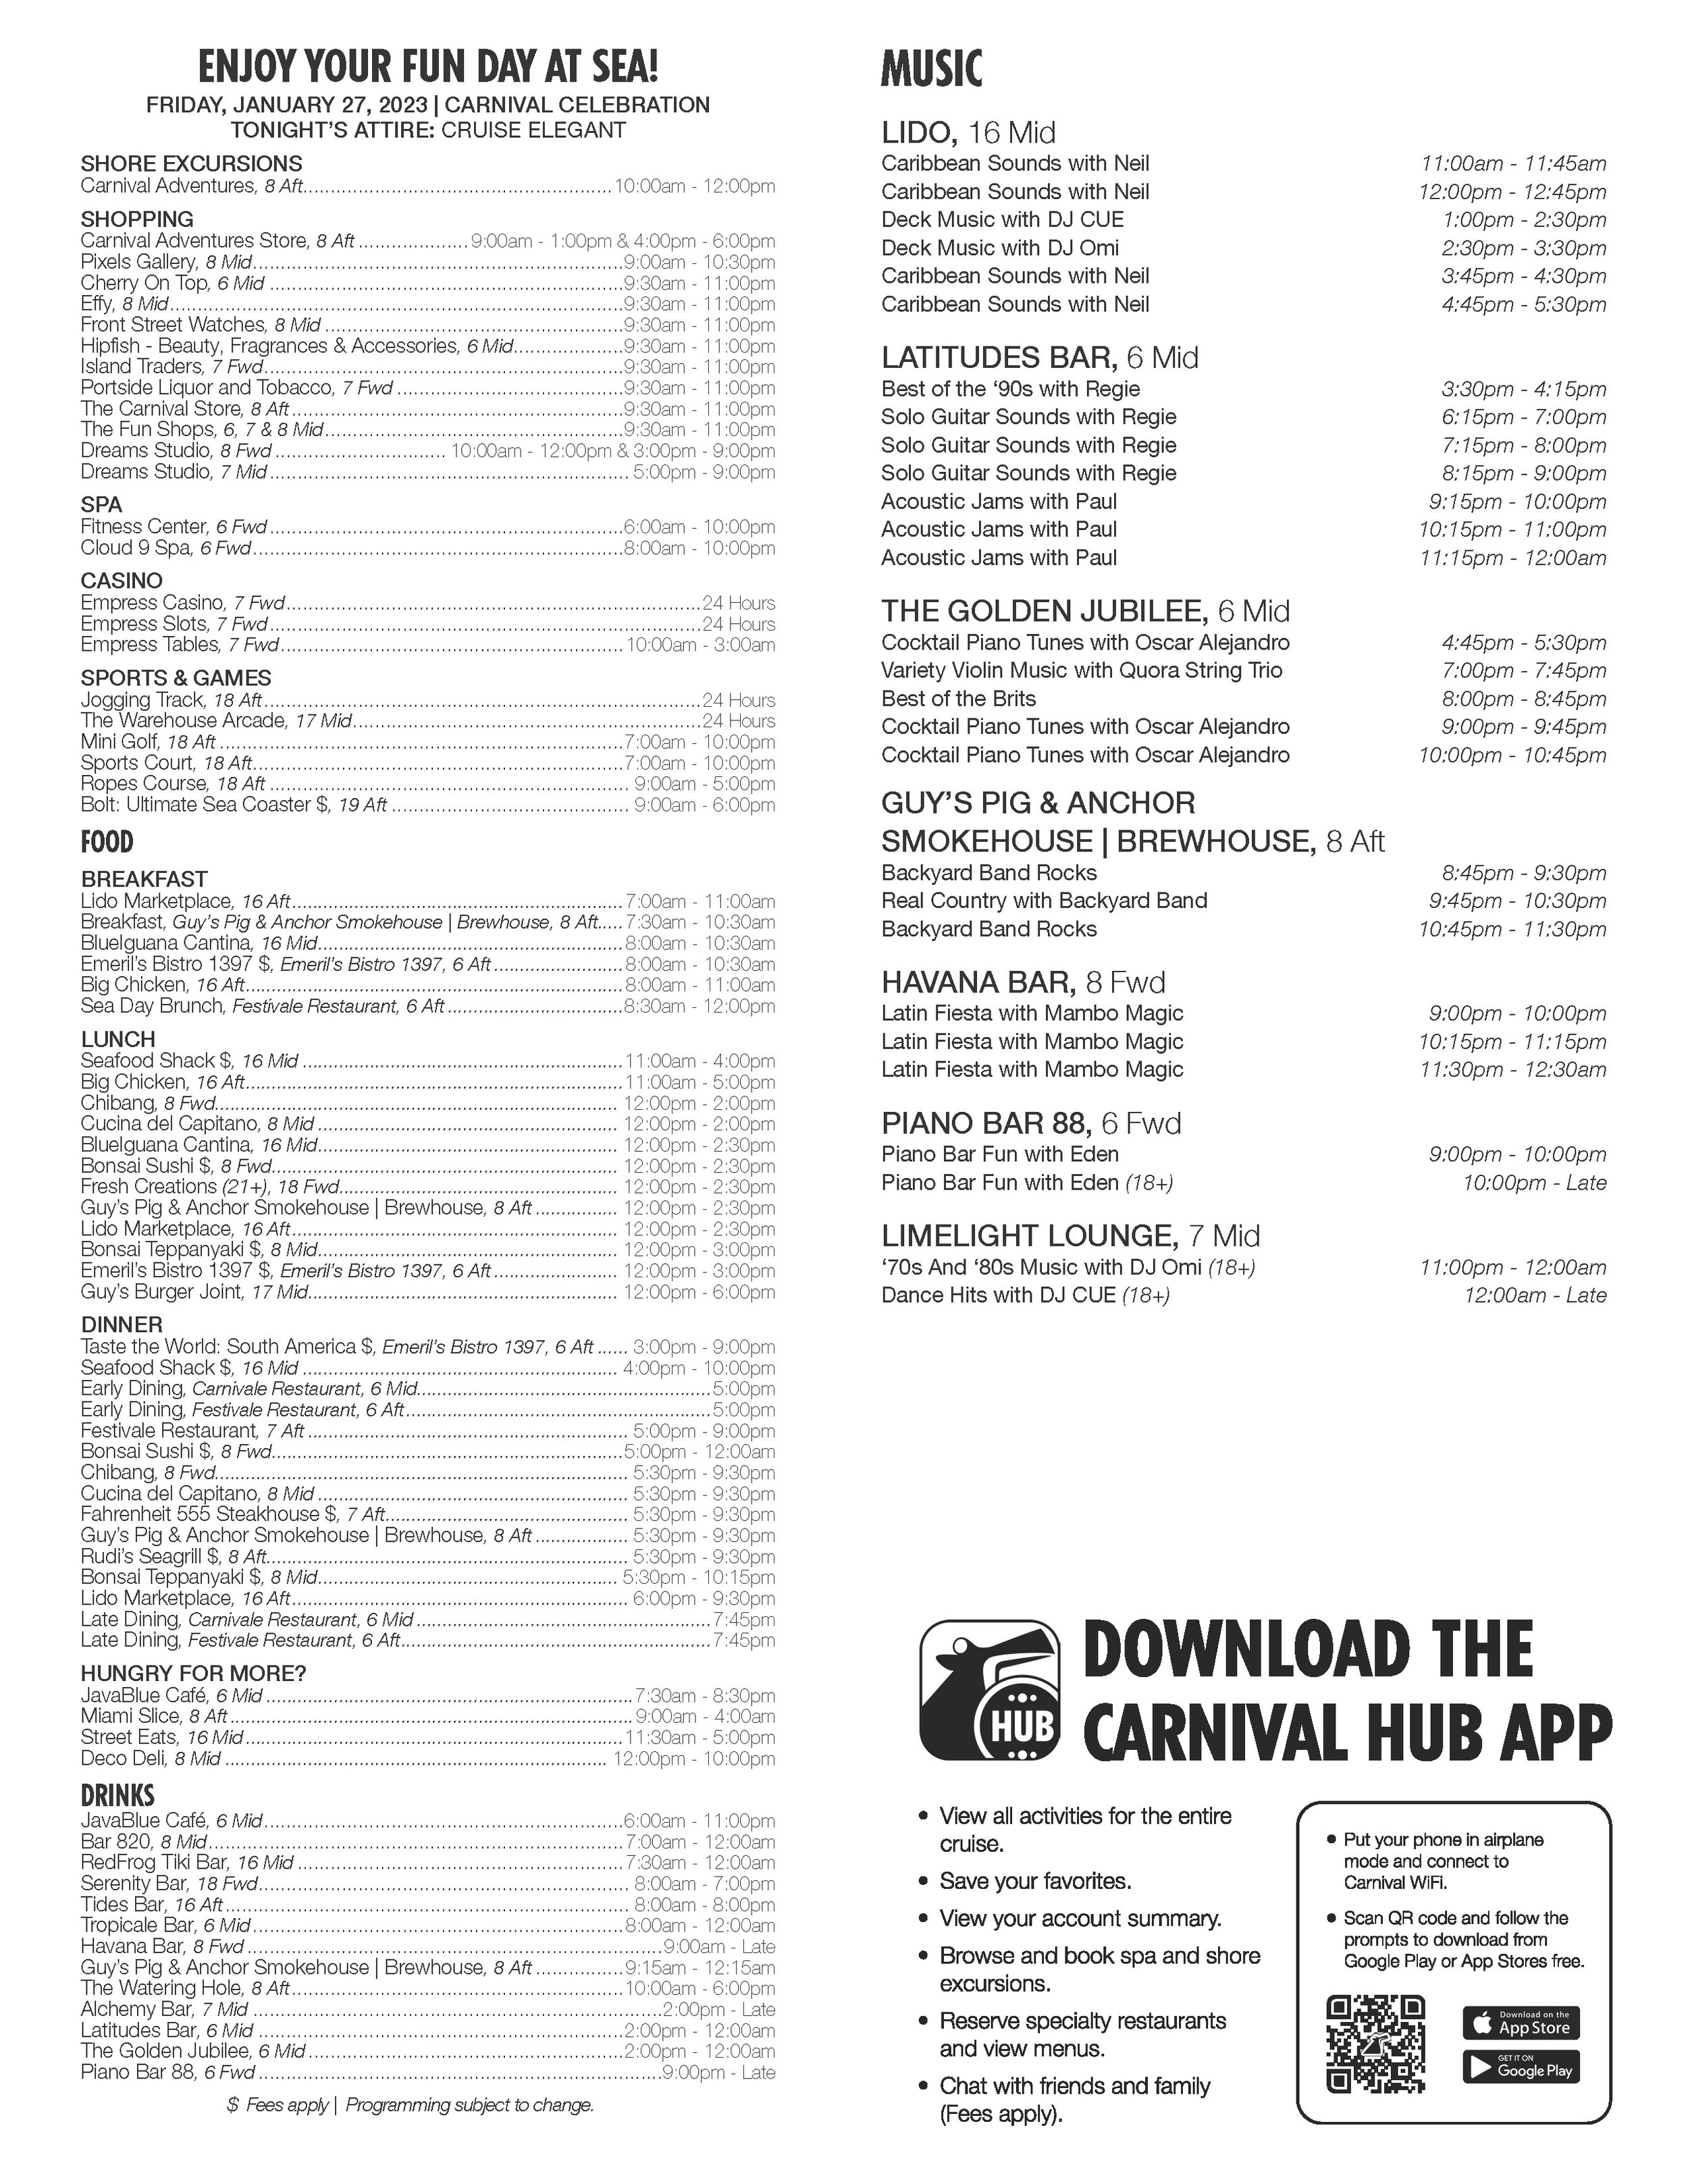 Carnival Celebration - January 27, 2023 -at sea - day 06_Page_2.jpg